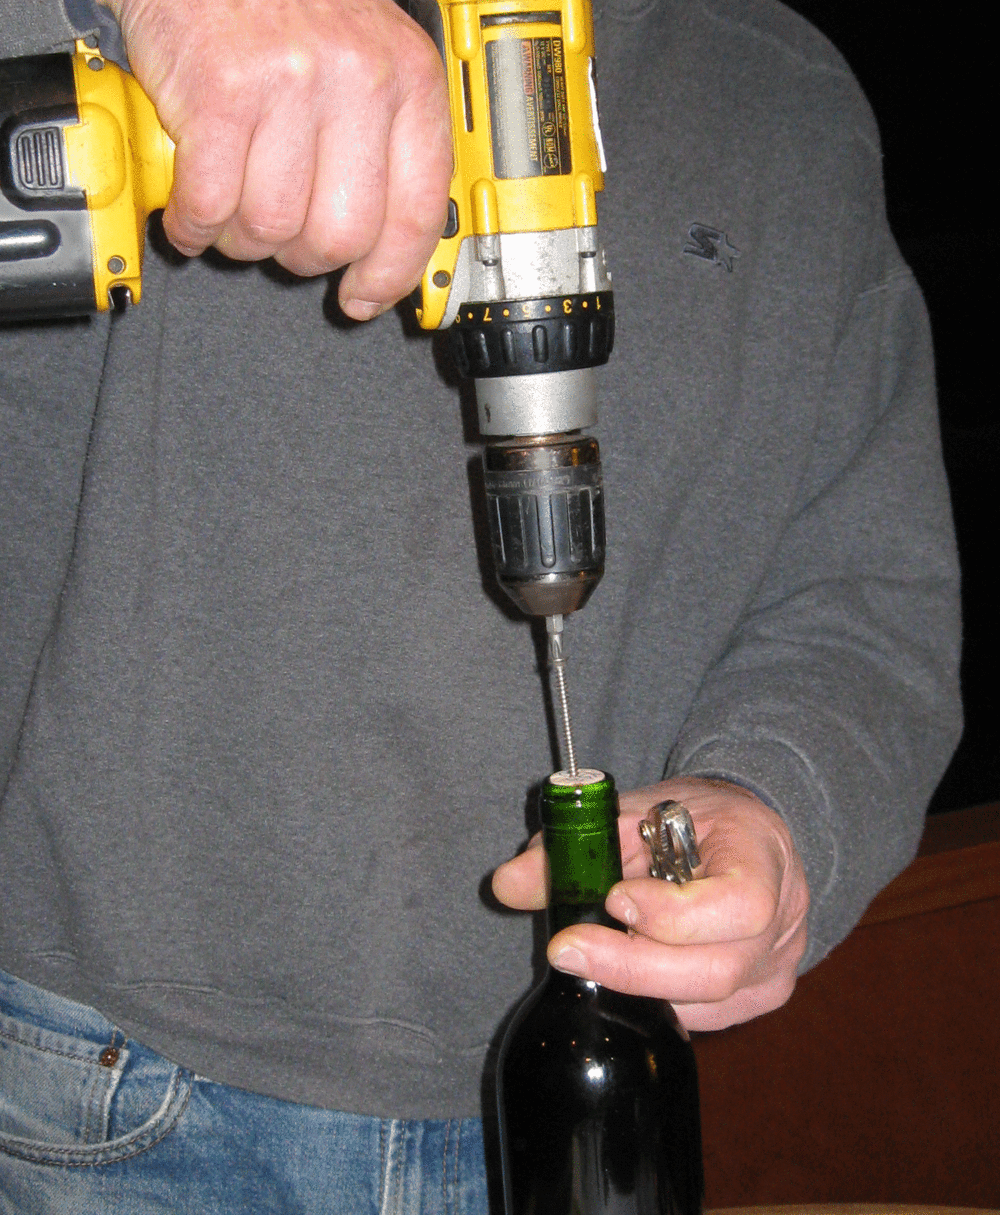 Corkscrew screw drill locking pliers removing wine cork